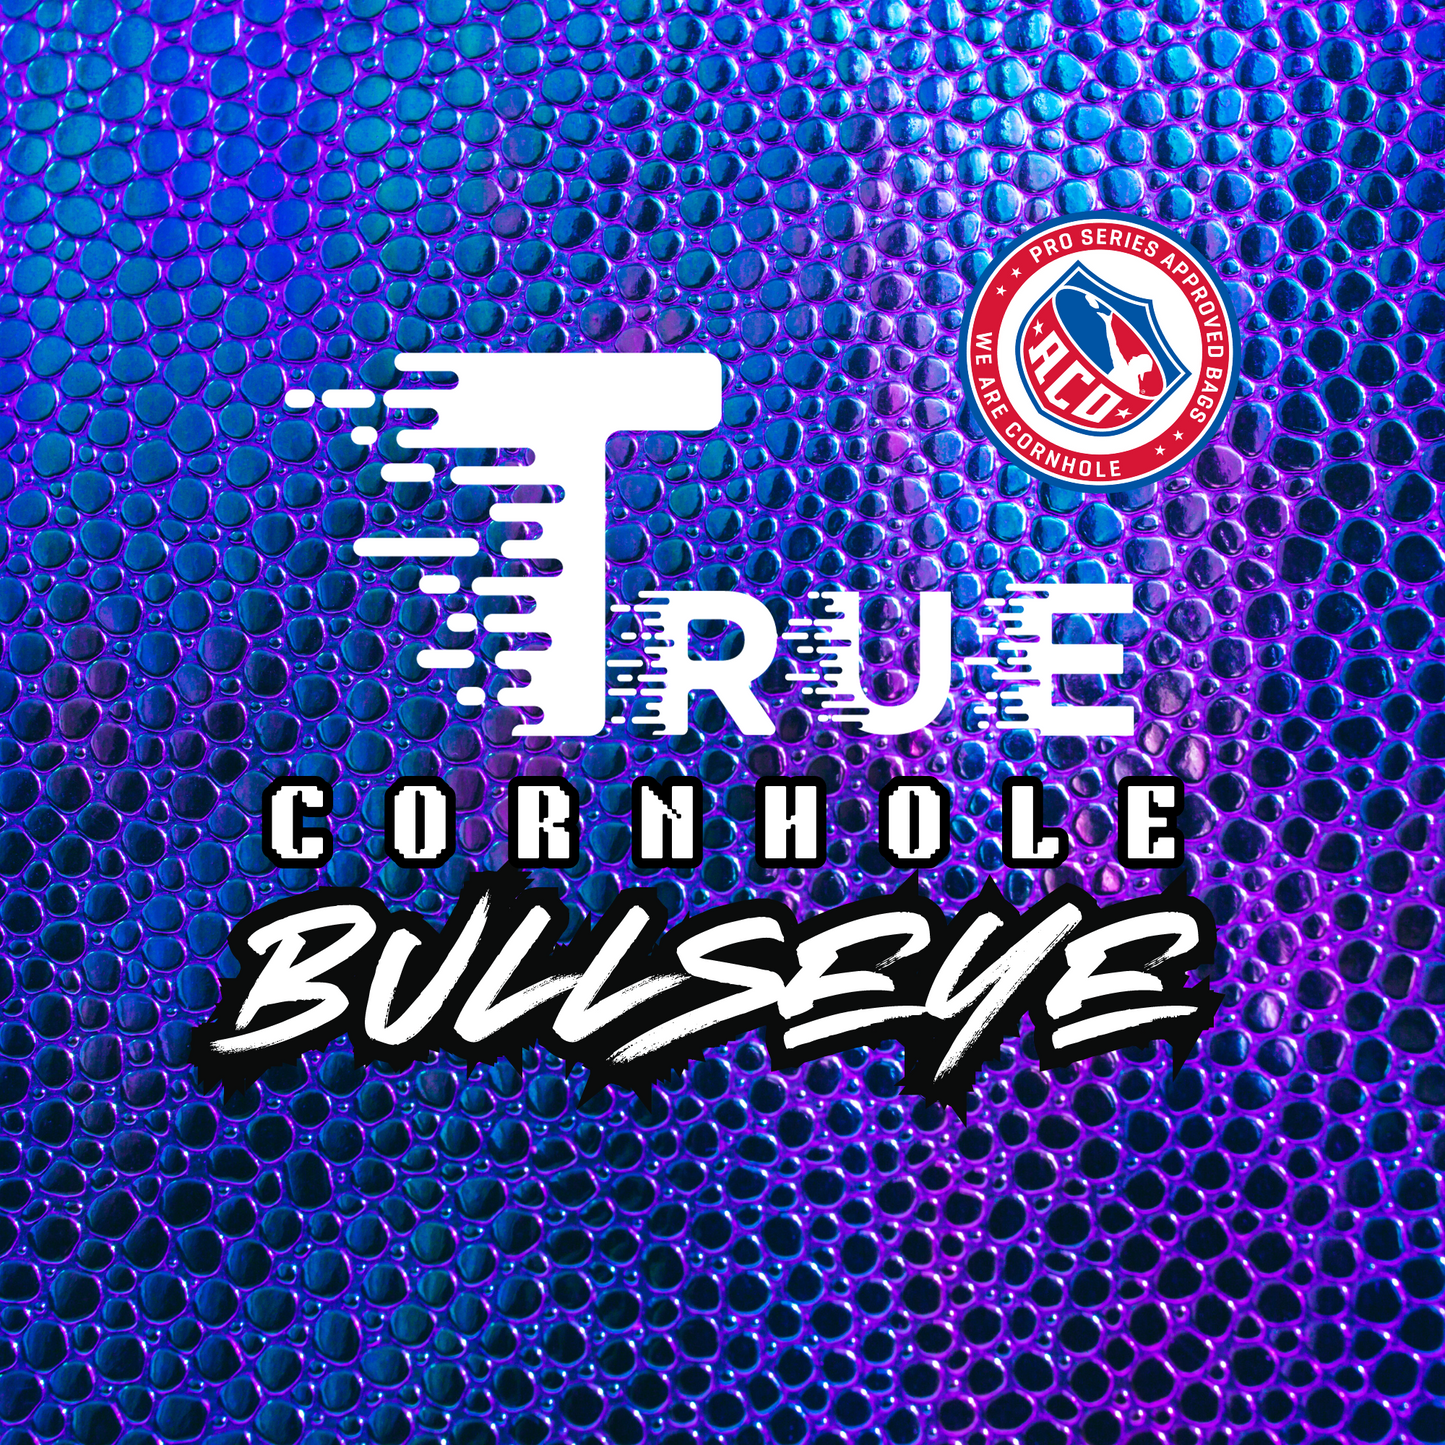 ACO APPROVED TRUE CORNHOLE 5/8 HYBRID CARPET BULLSEYE